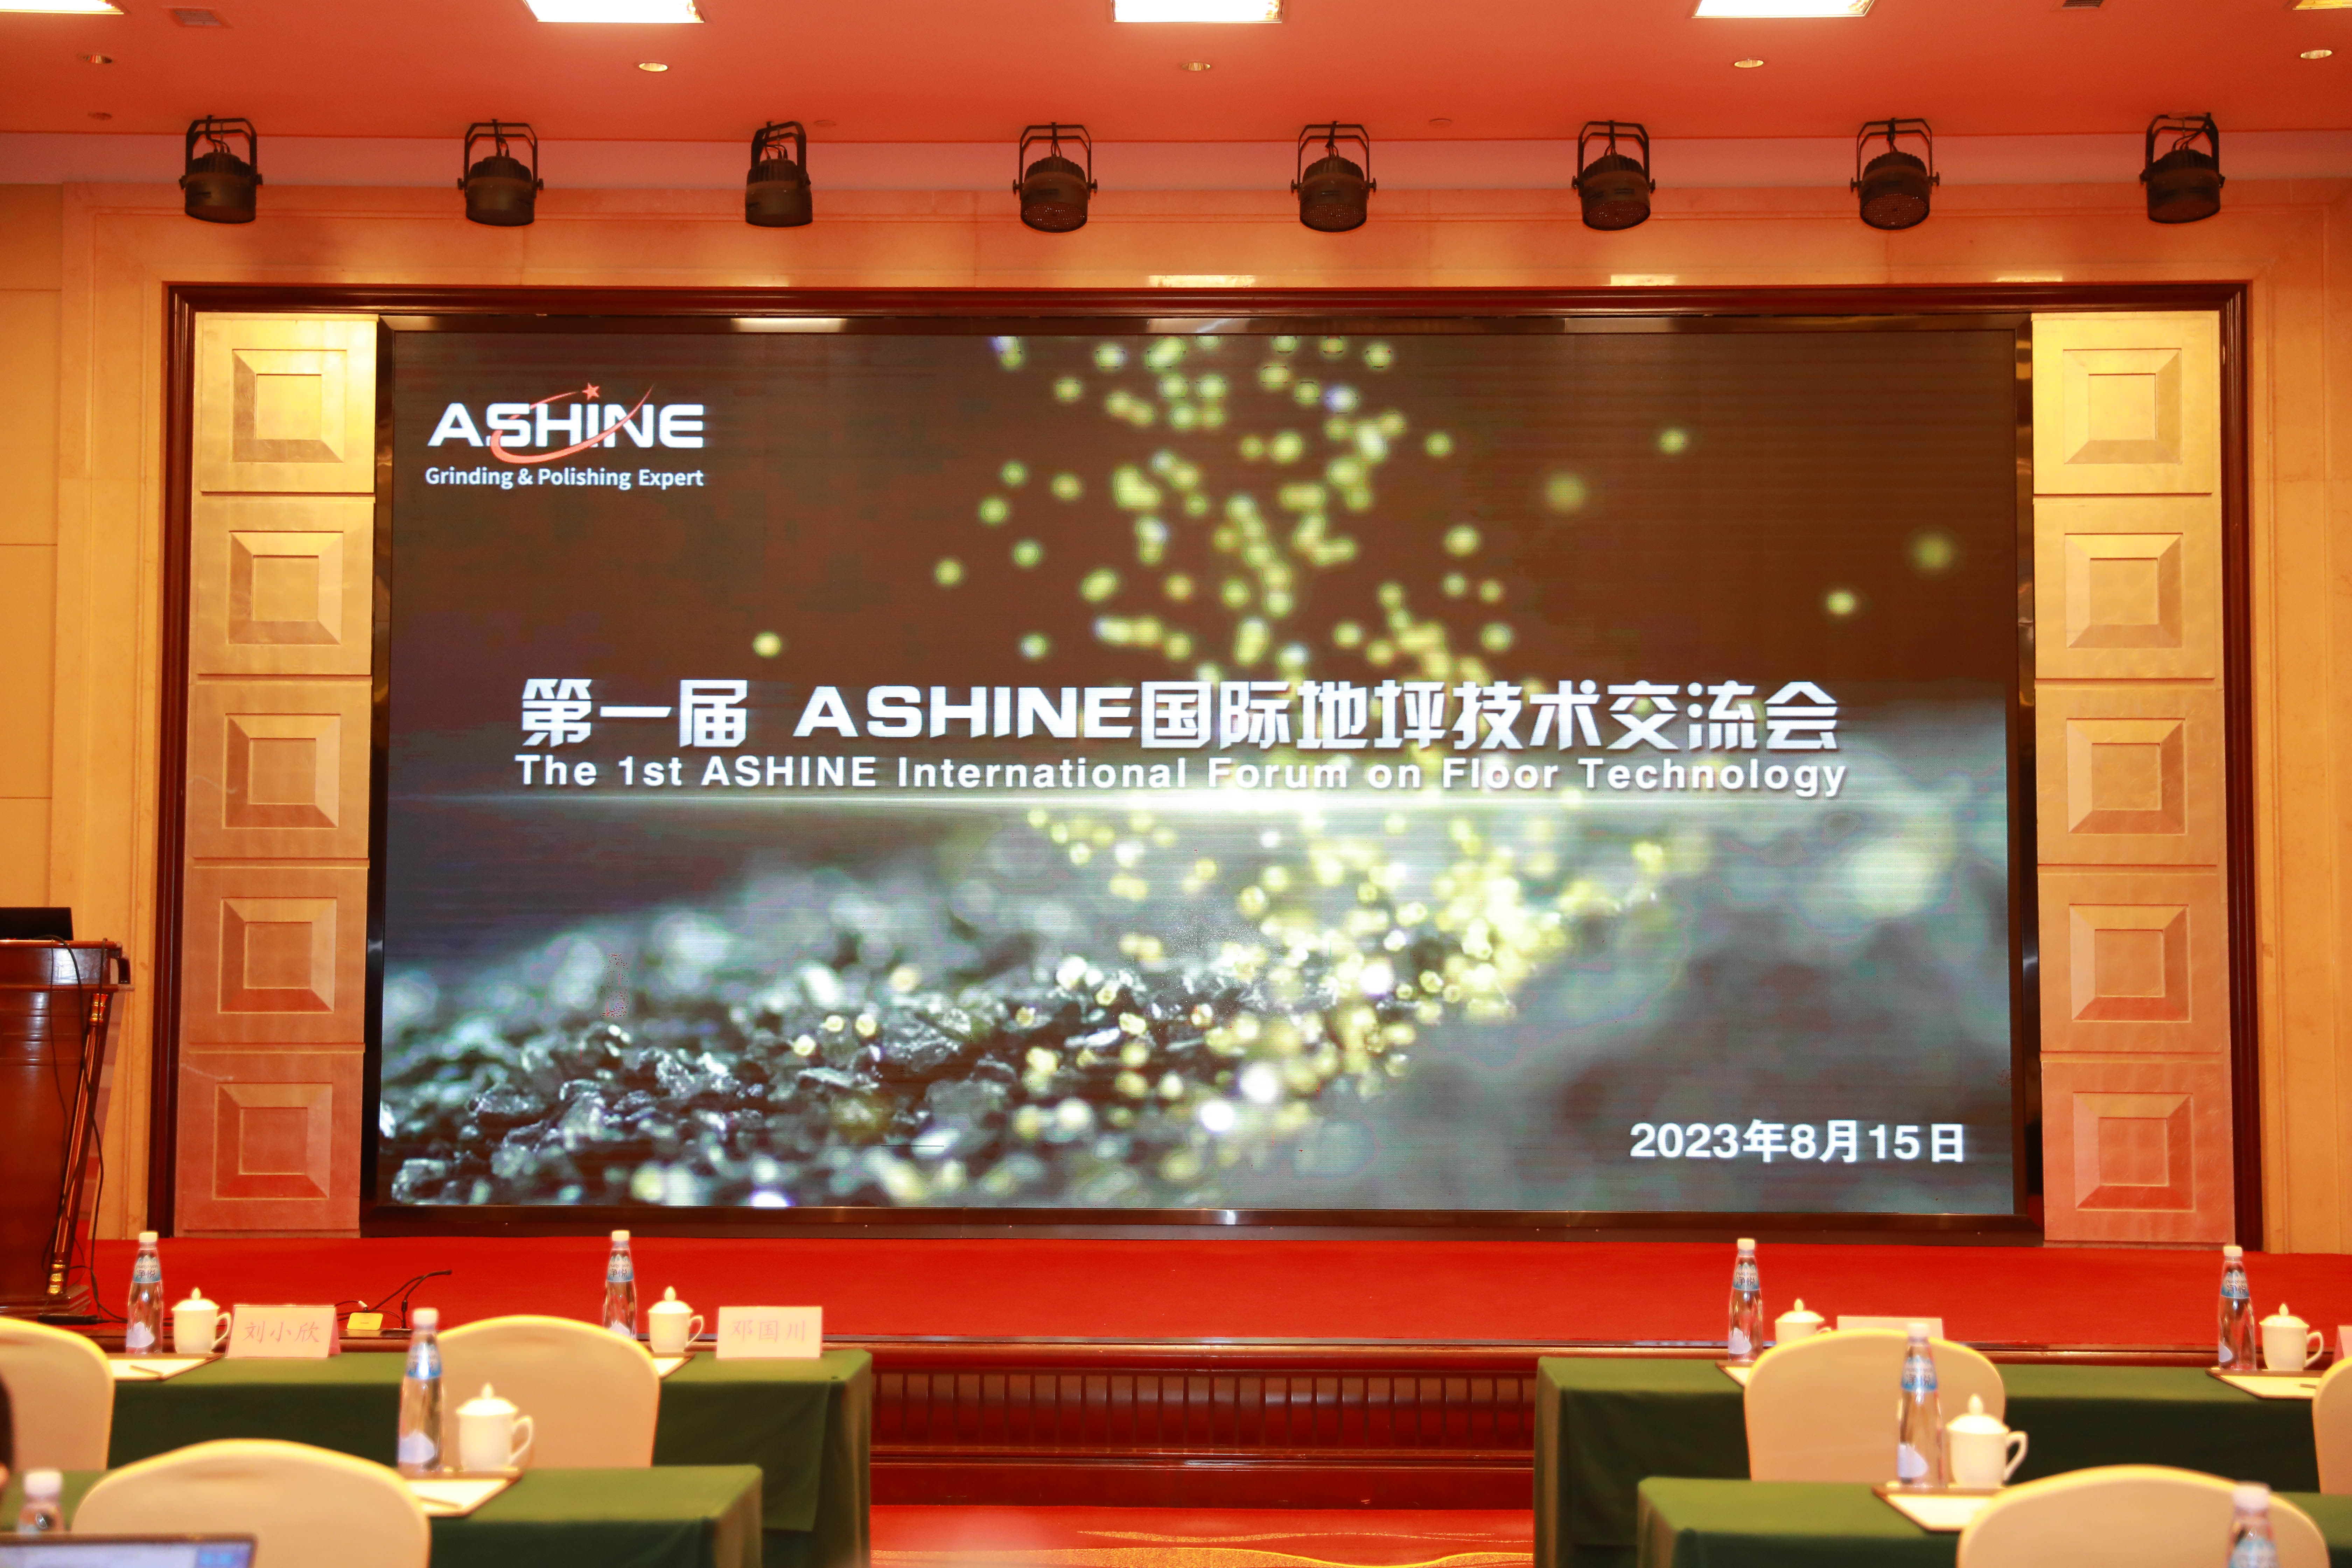 The 1st Ashine International Forum on Floor Technology